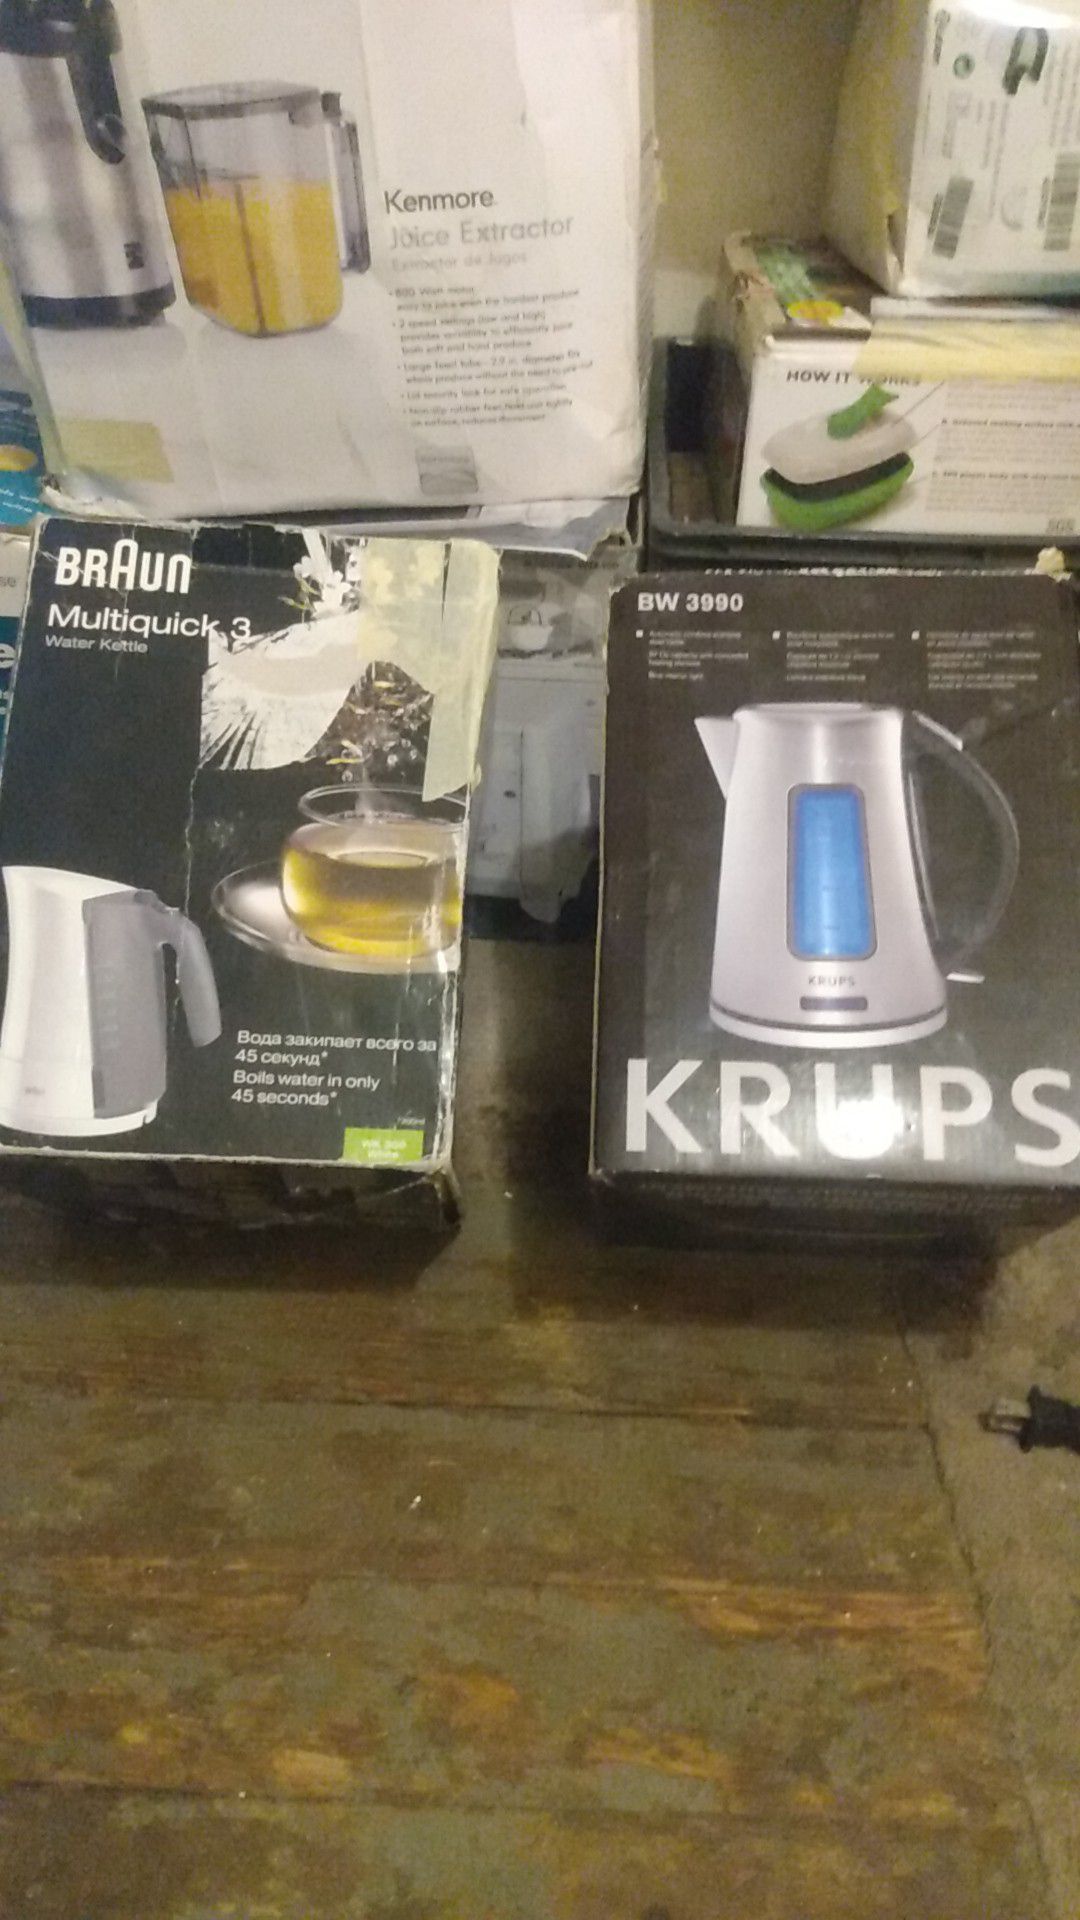 Braun multi quick 3 water kettle & Krups water kettle